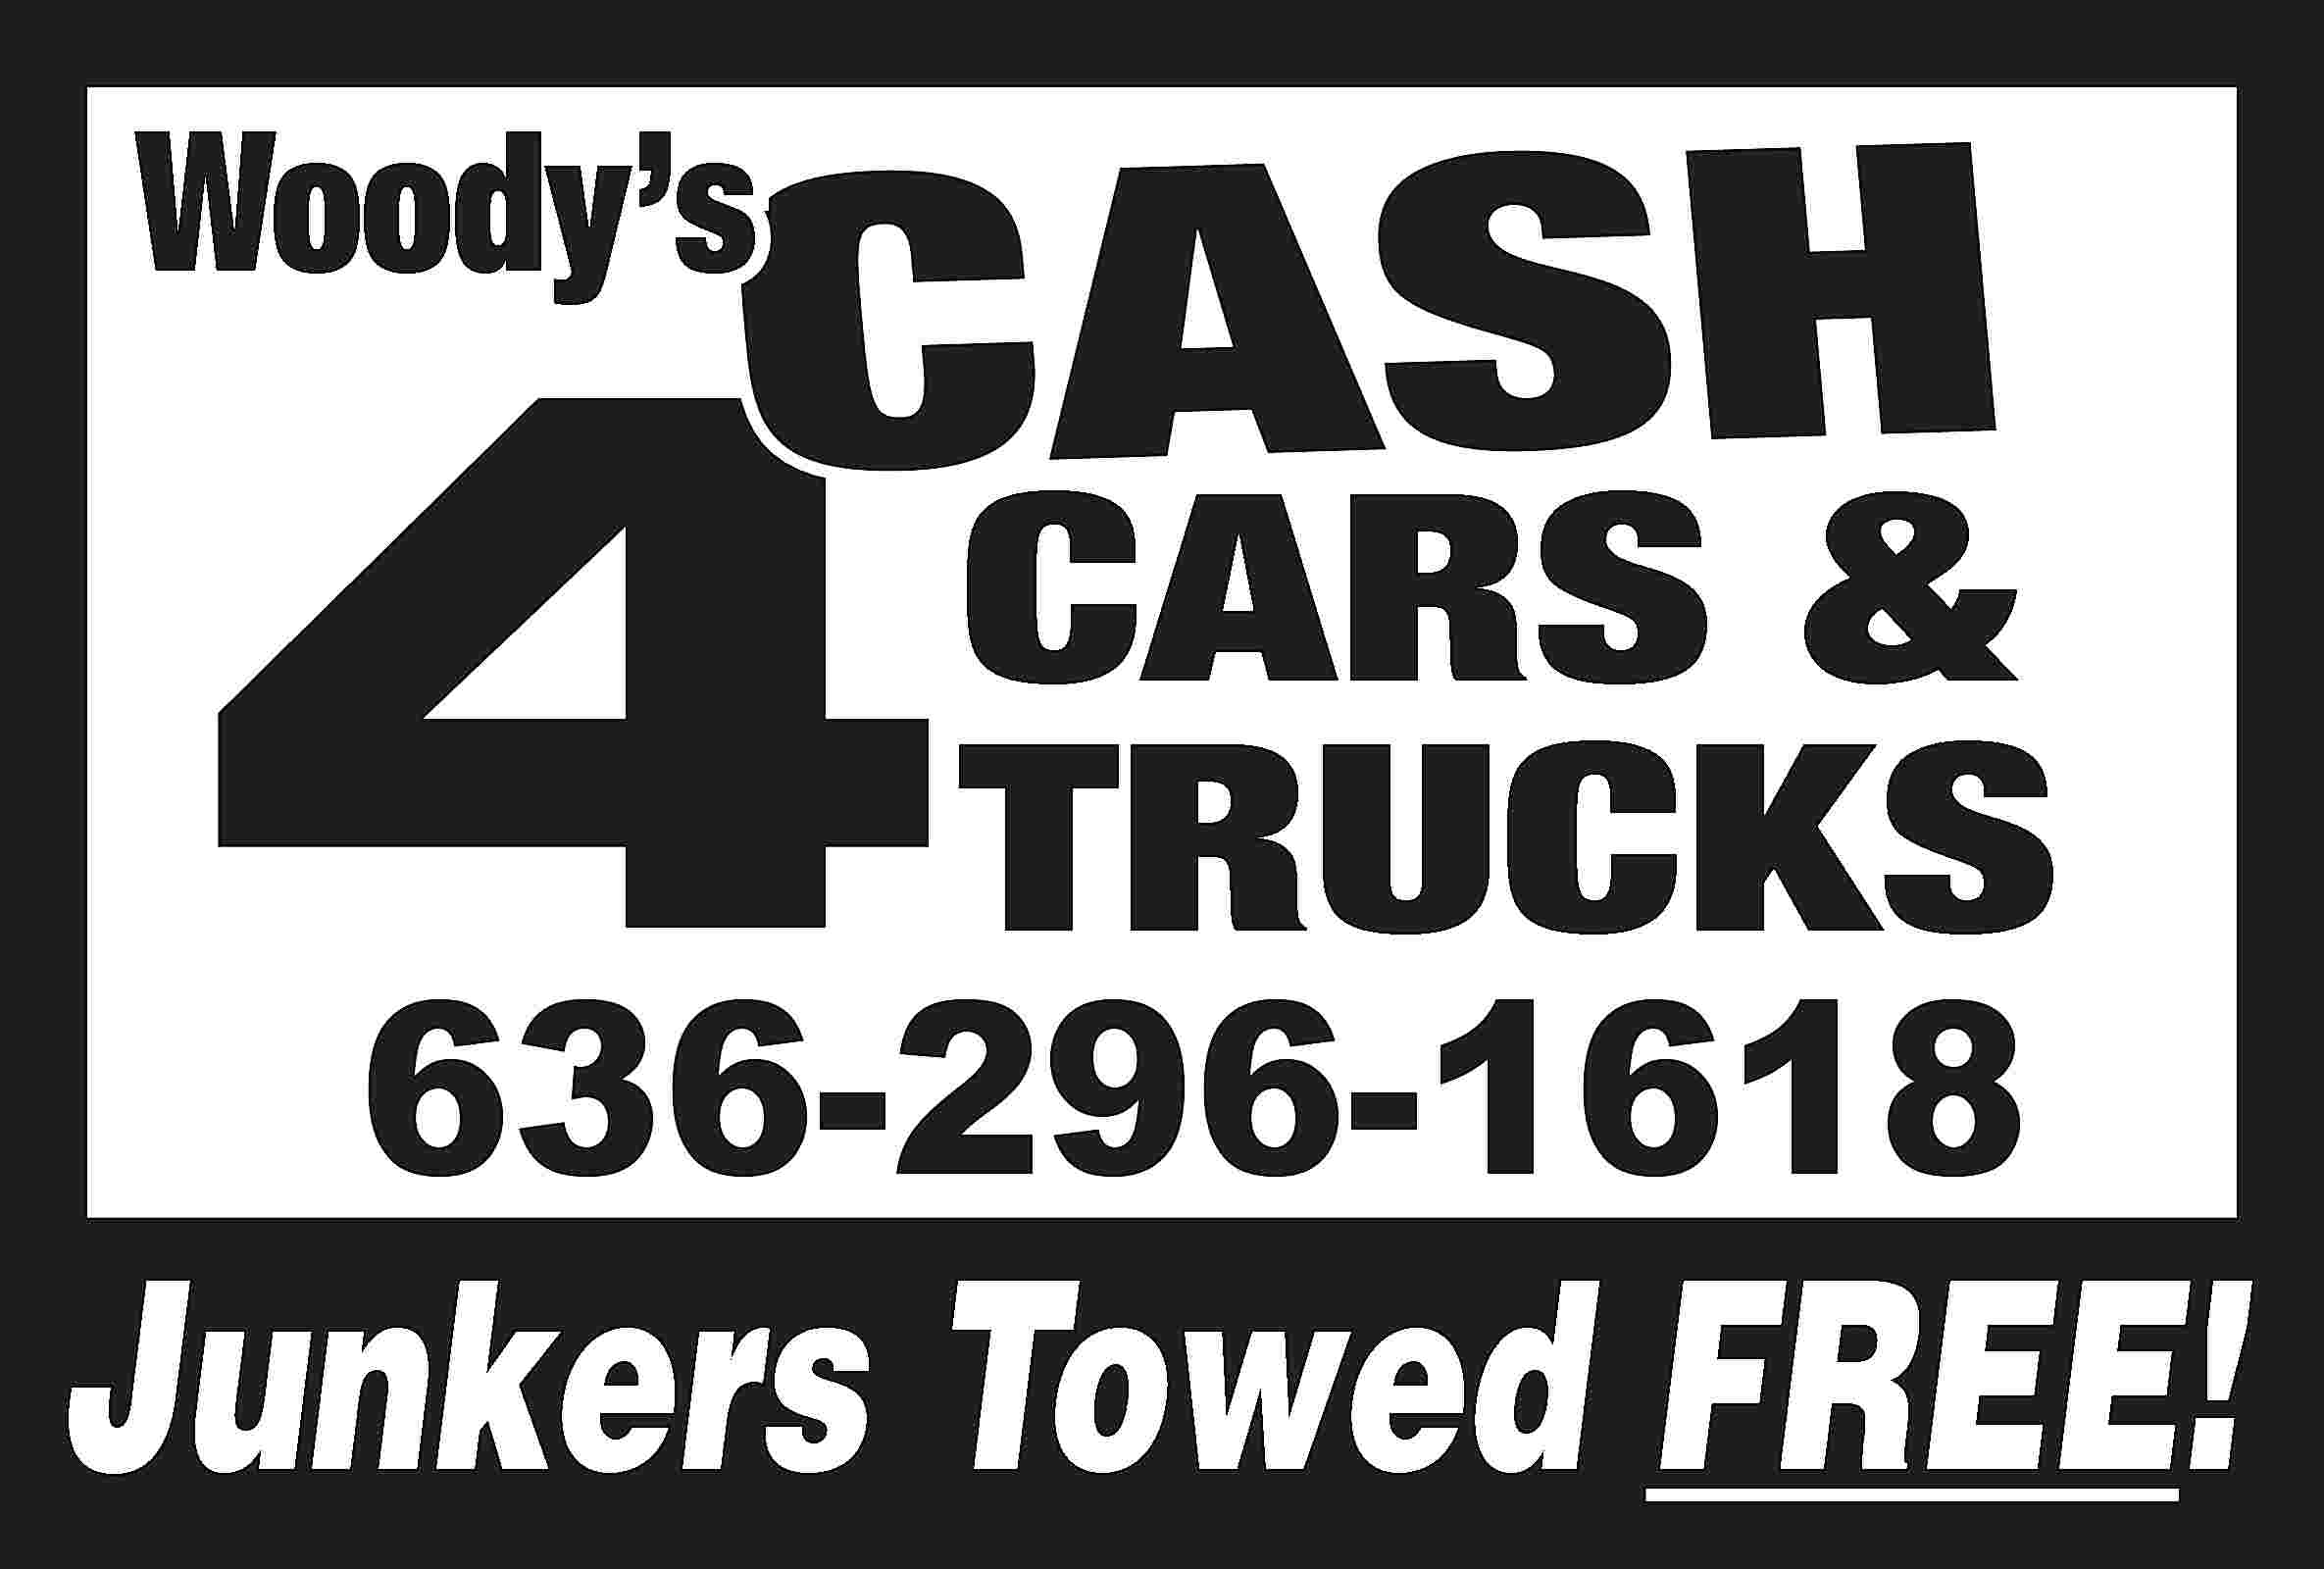 CASH Woody’s 4 CARS &  CASH Woody’s 4 CARS & TRUCKS 636-296-1618 Junkers Towed FREE!